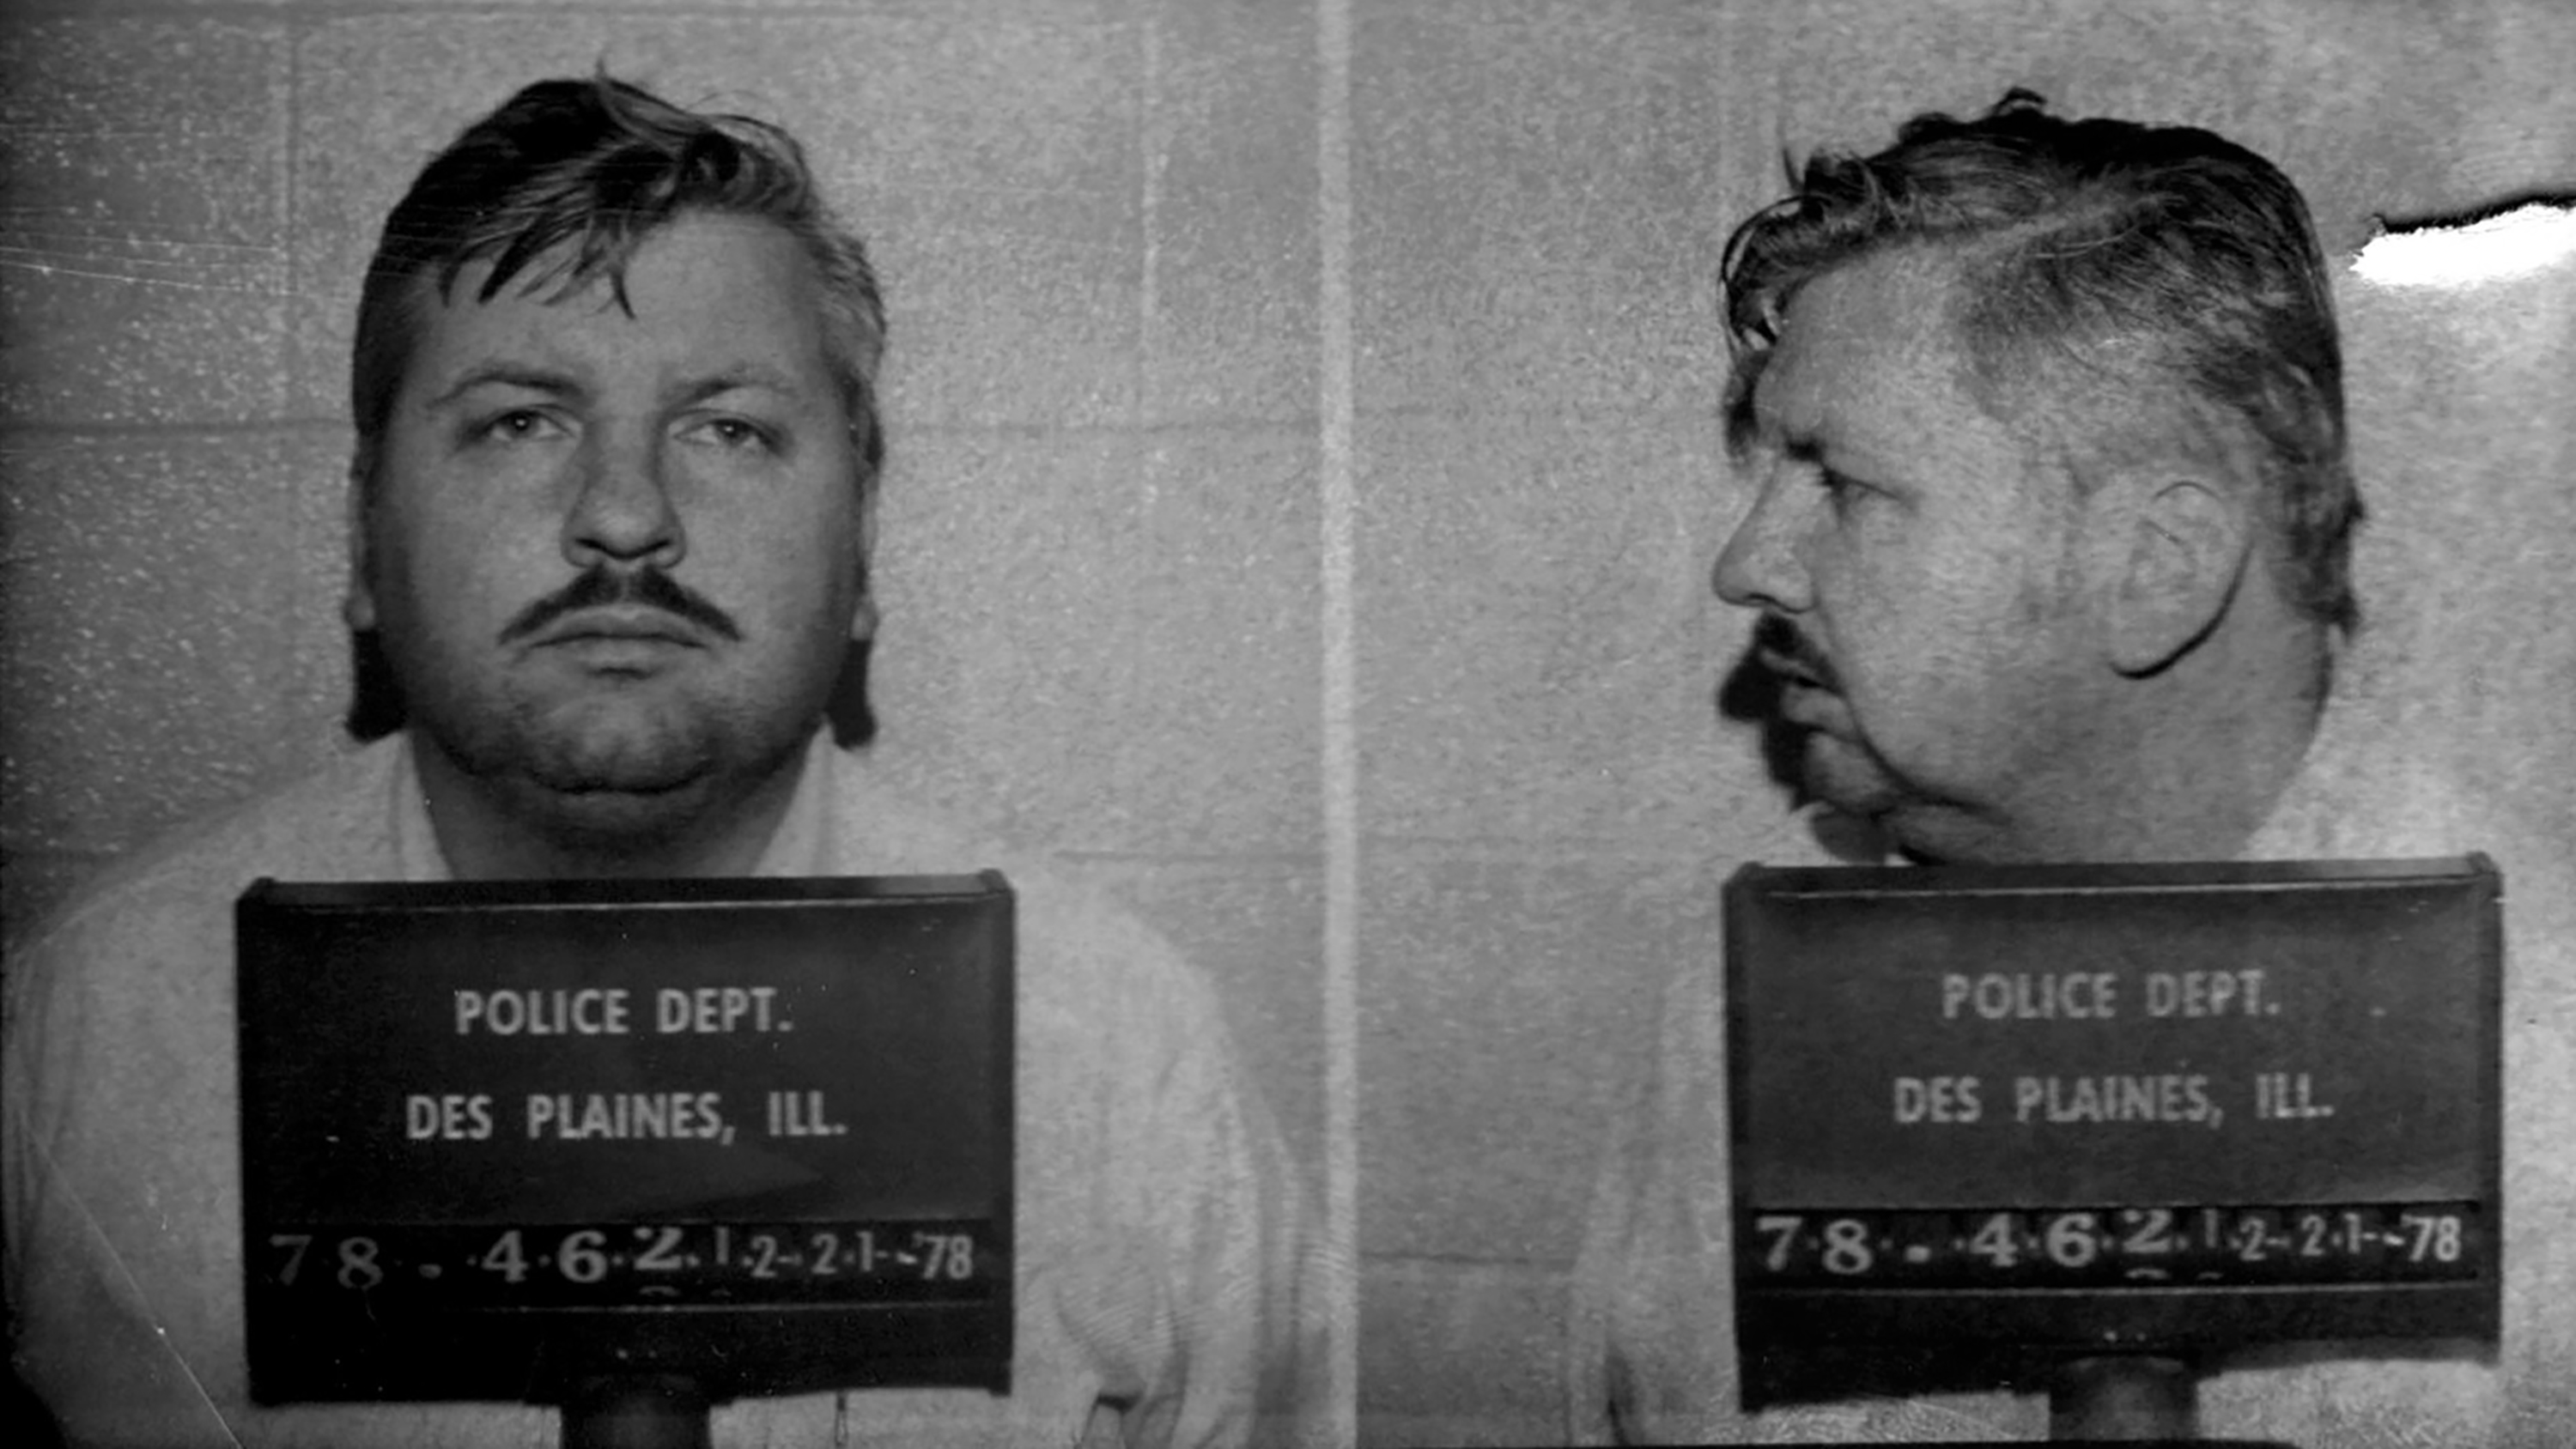 John Wayne Gacy's mugshots taken at the Des Plaines Police Department on December 21, 1978. | Source: Getty Images